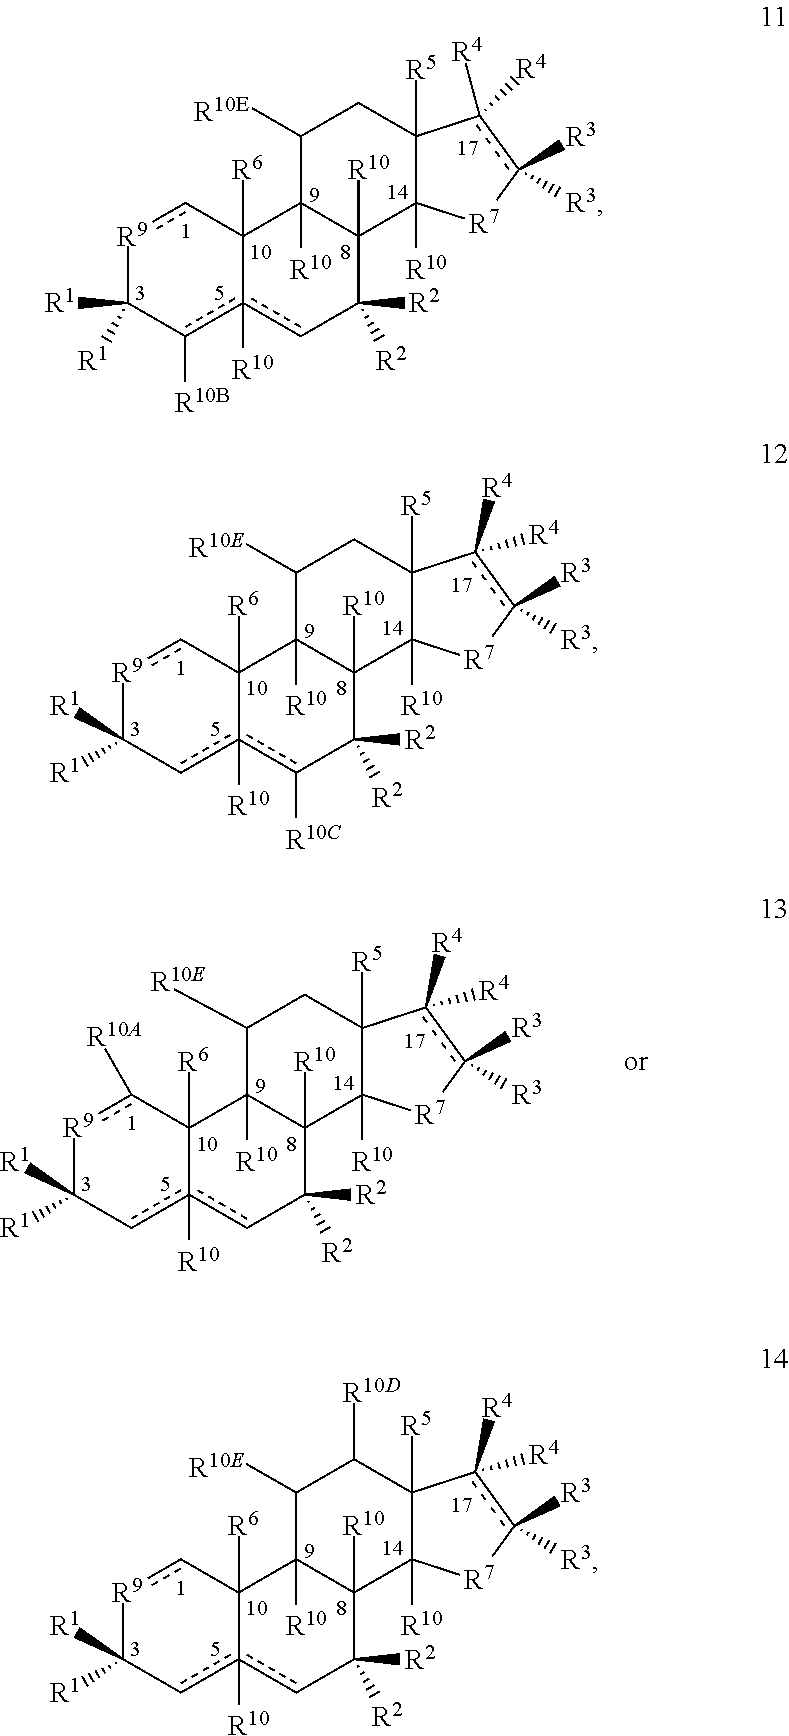 Steroids having 7-oxgen and 17-heteroaryl substitution